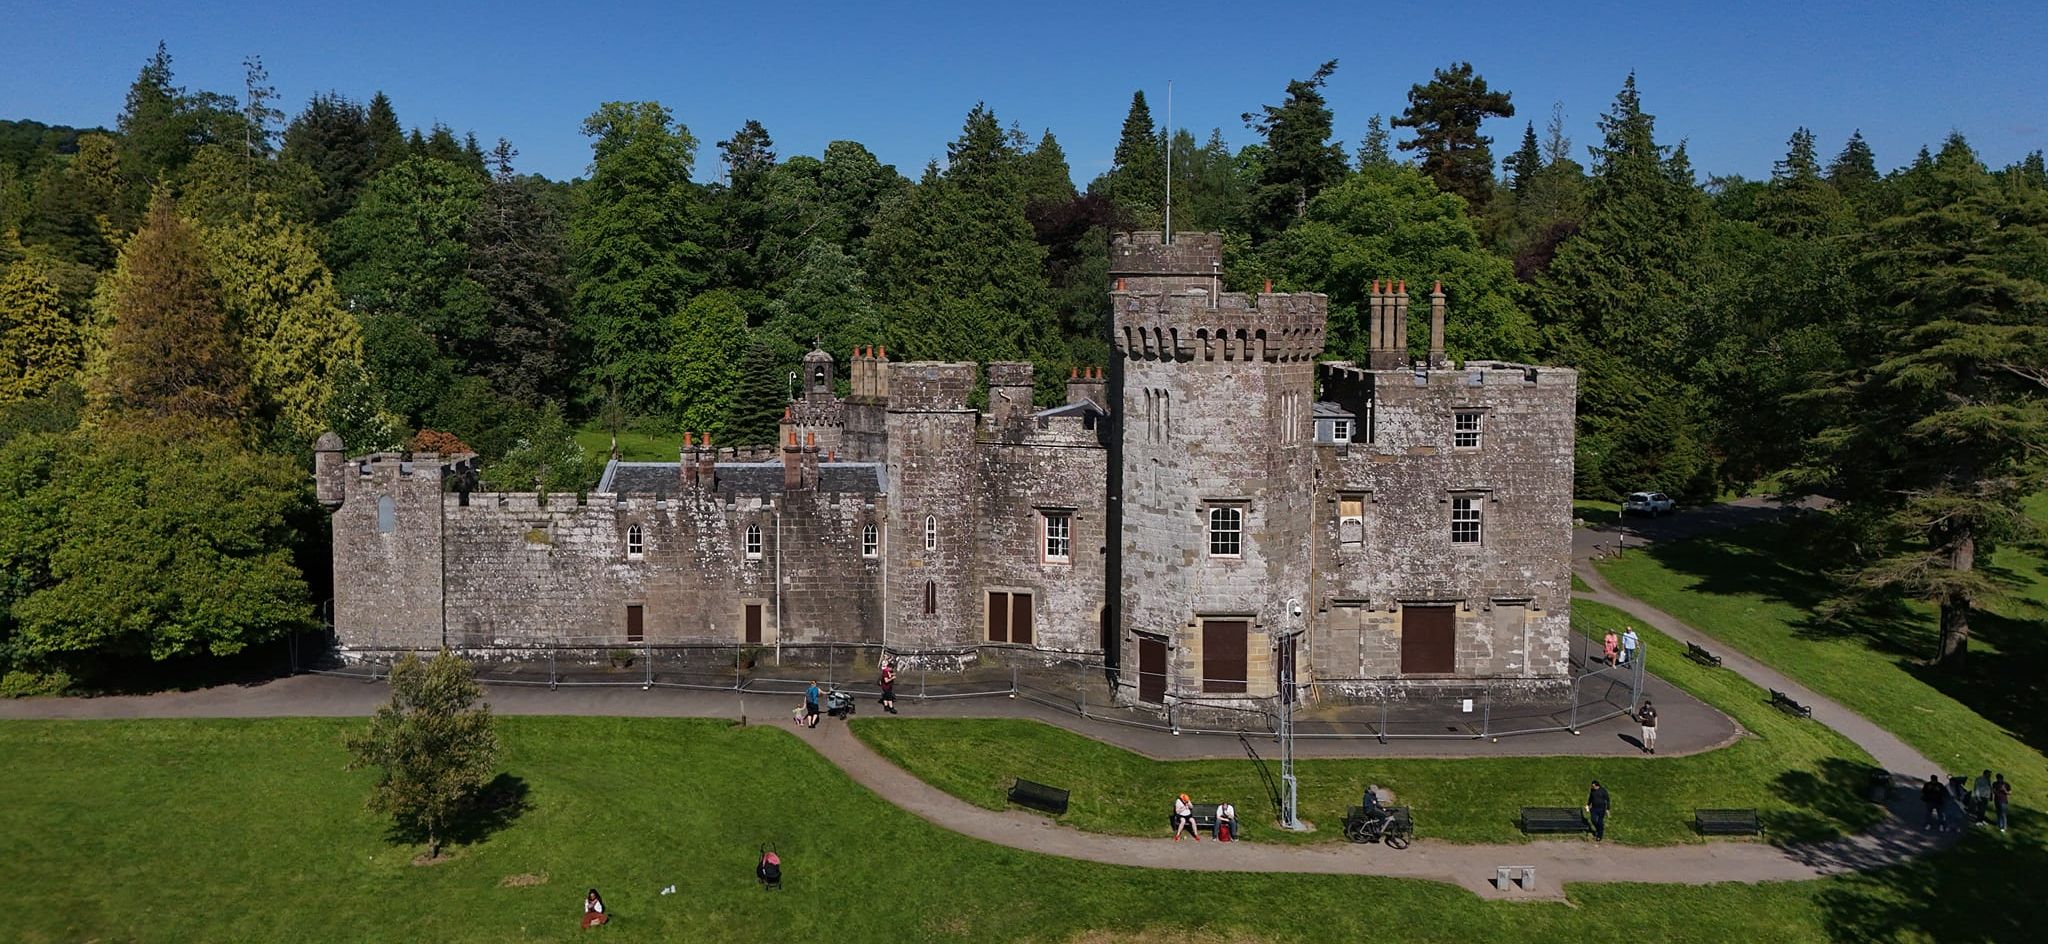 Balloch Castle in Balloch Country Park